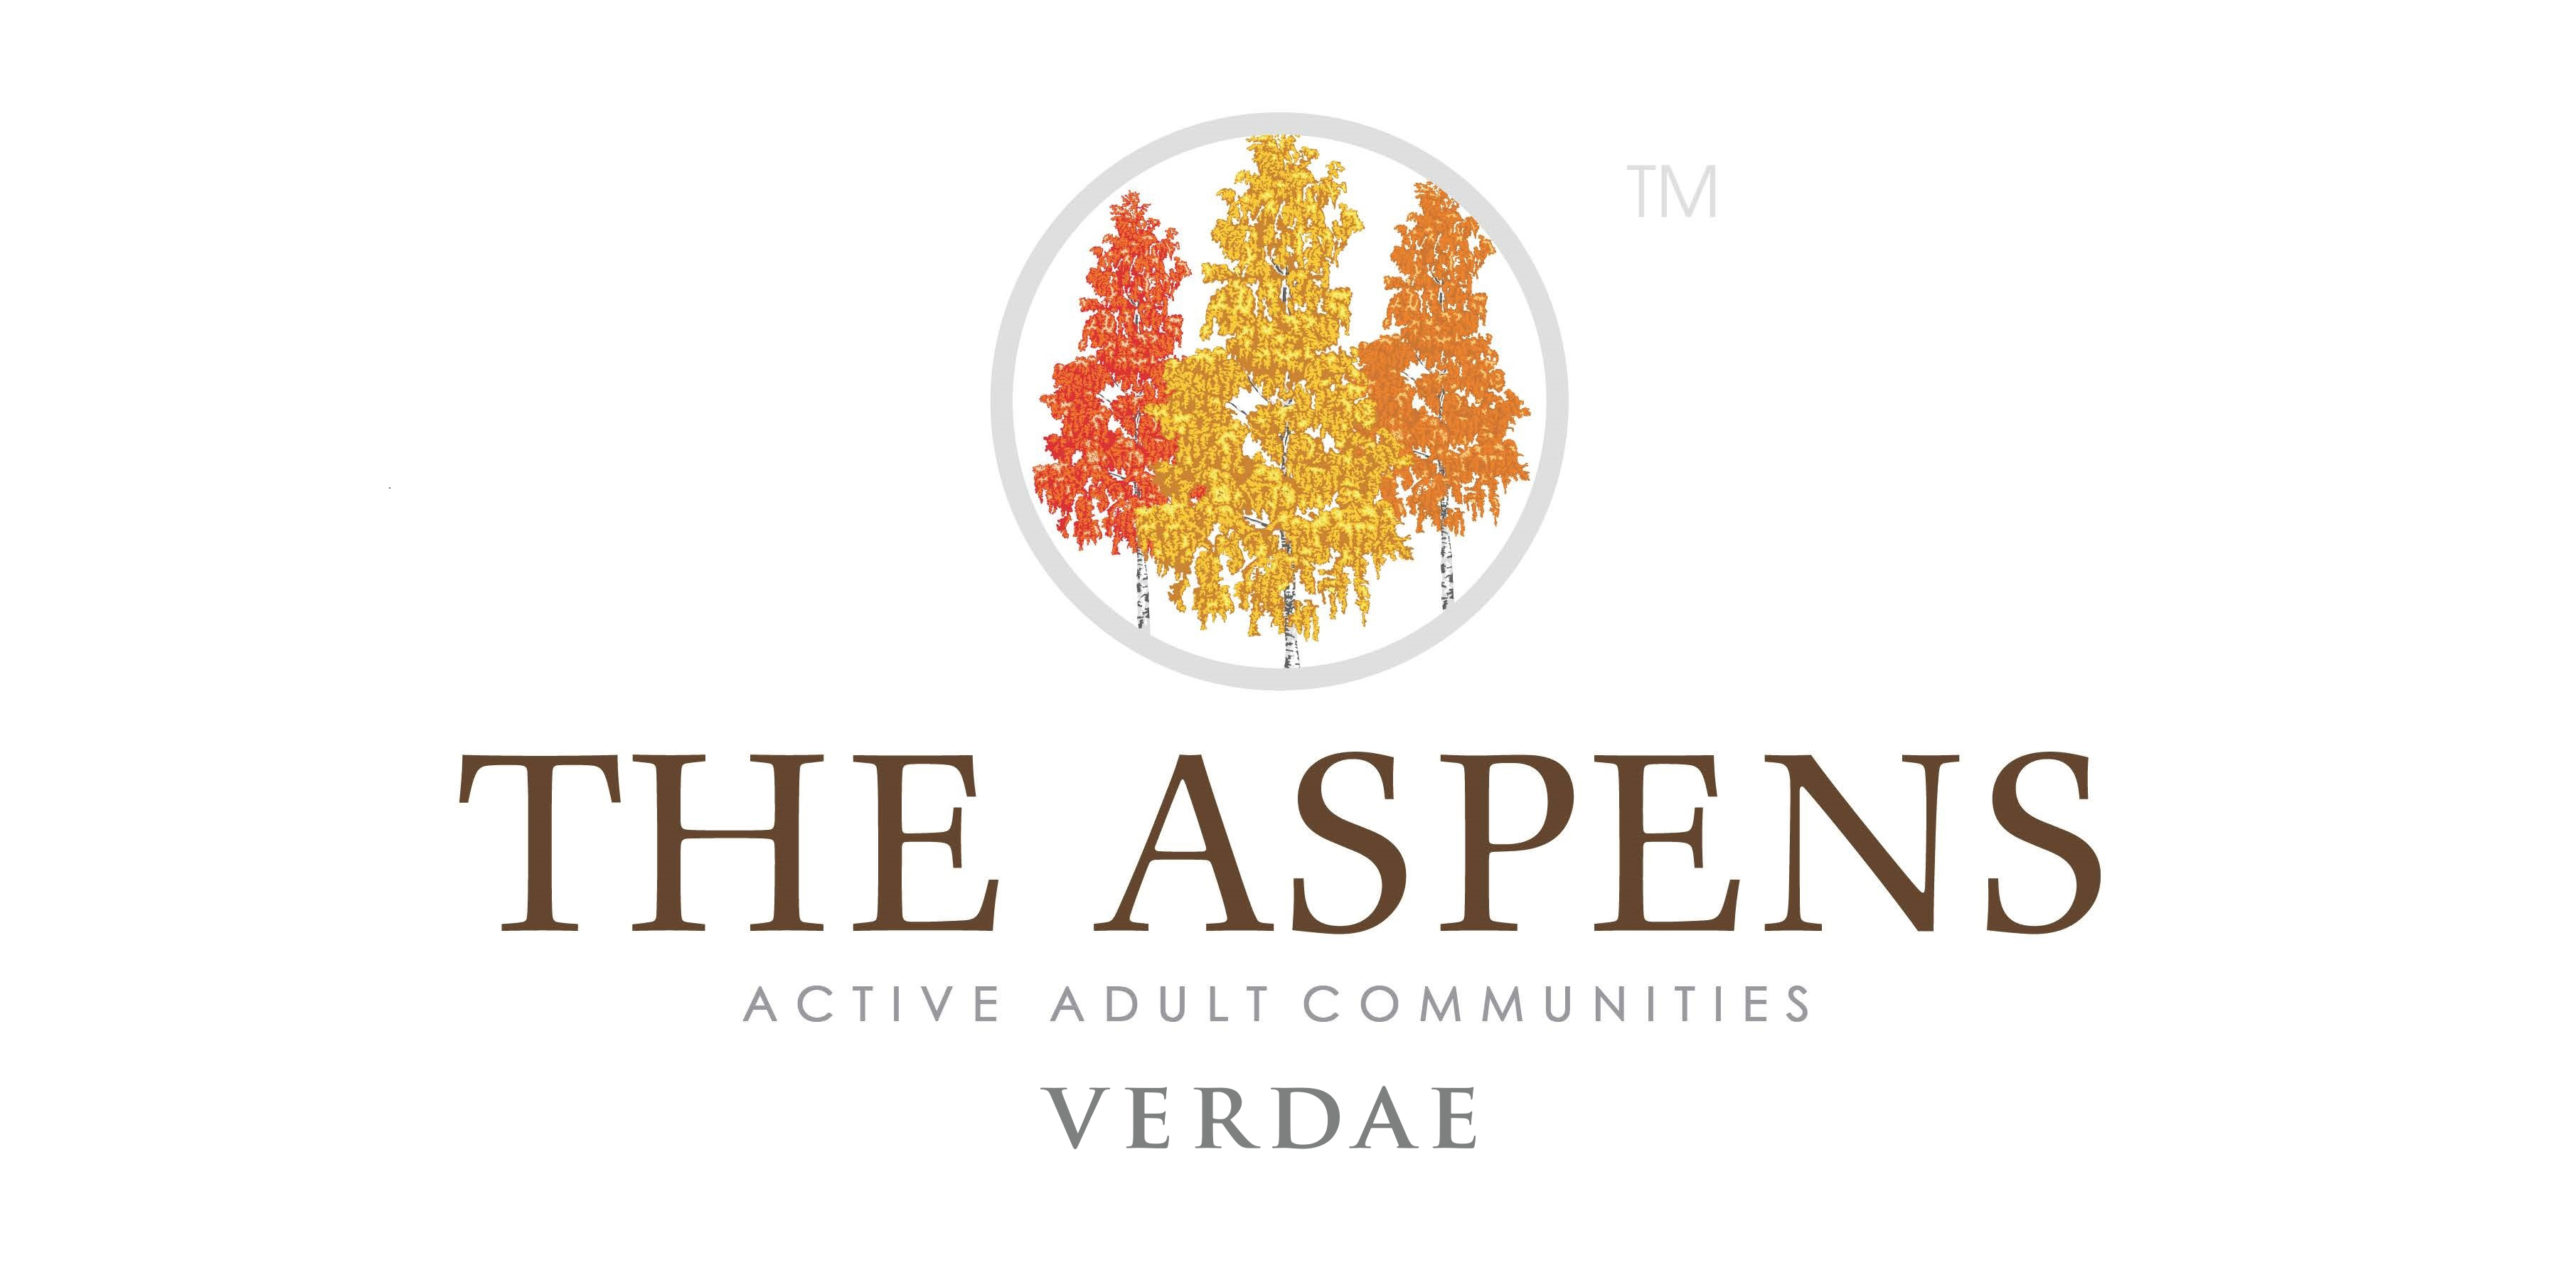 The Aspens at Verdae, LP (dba The Aspens Verdae)